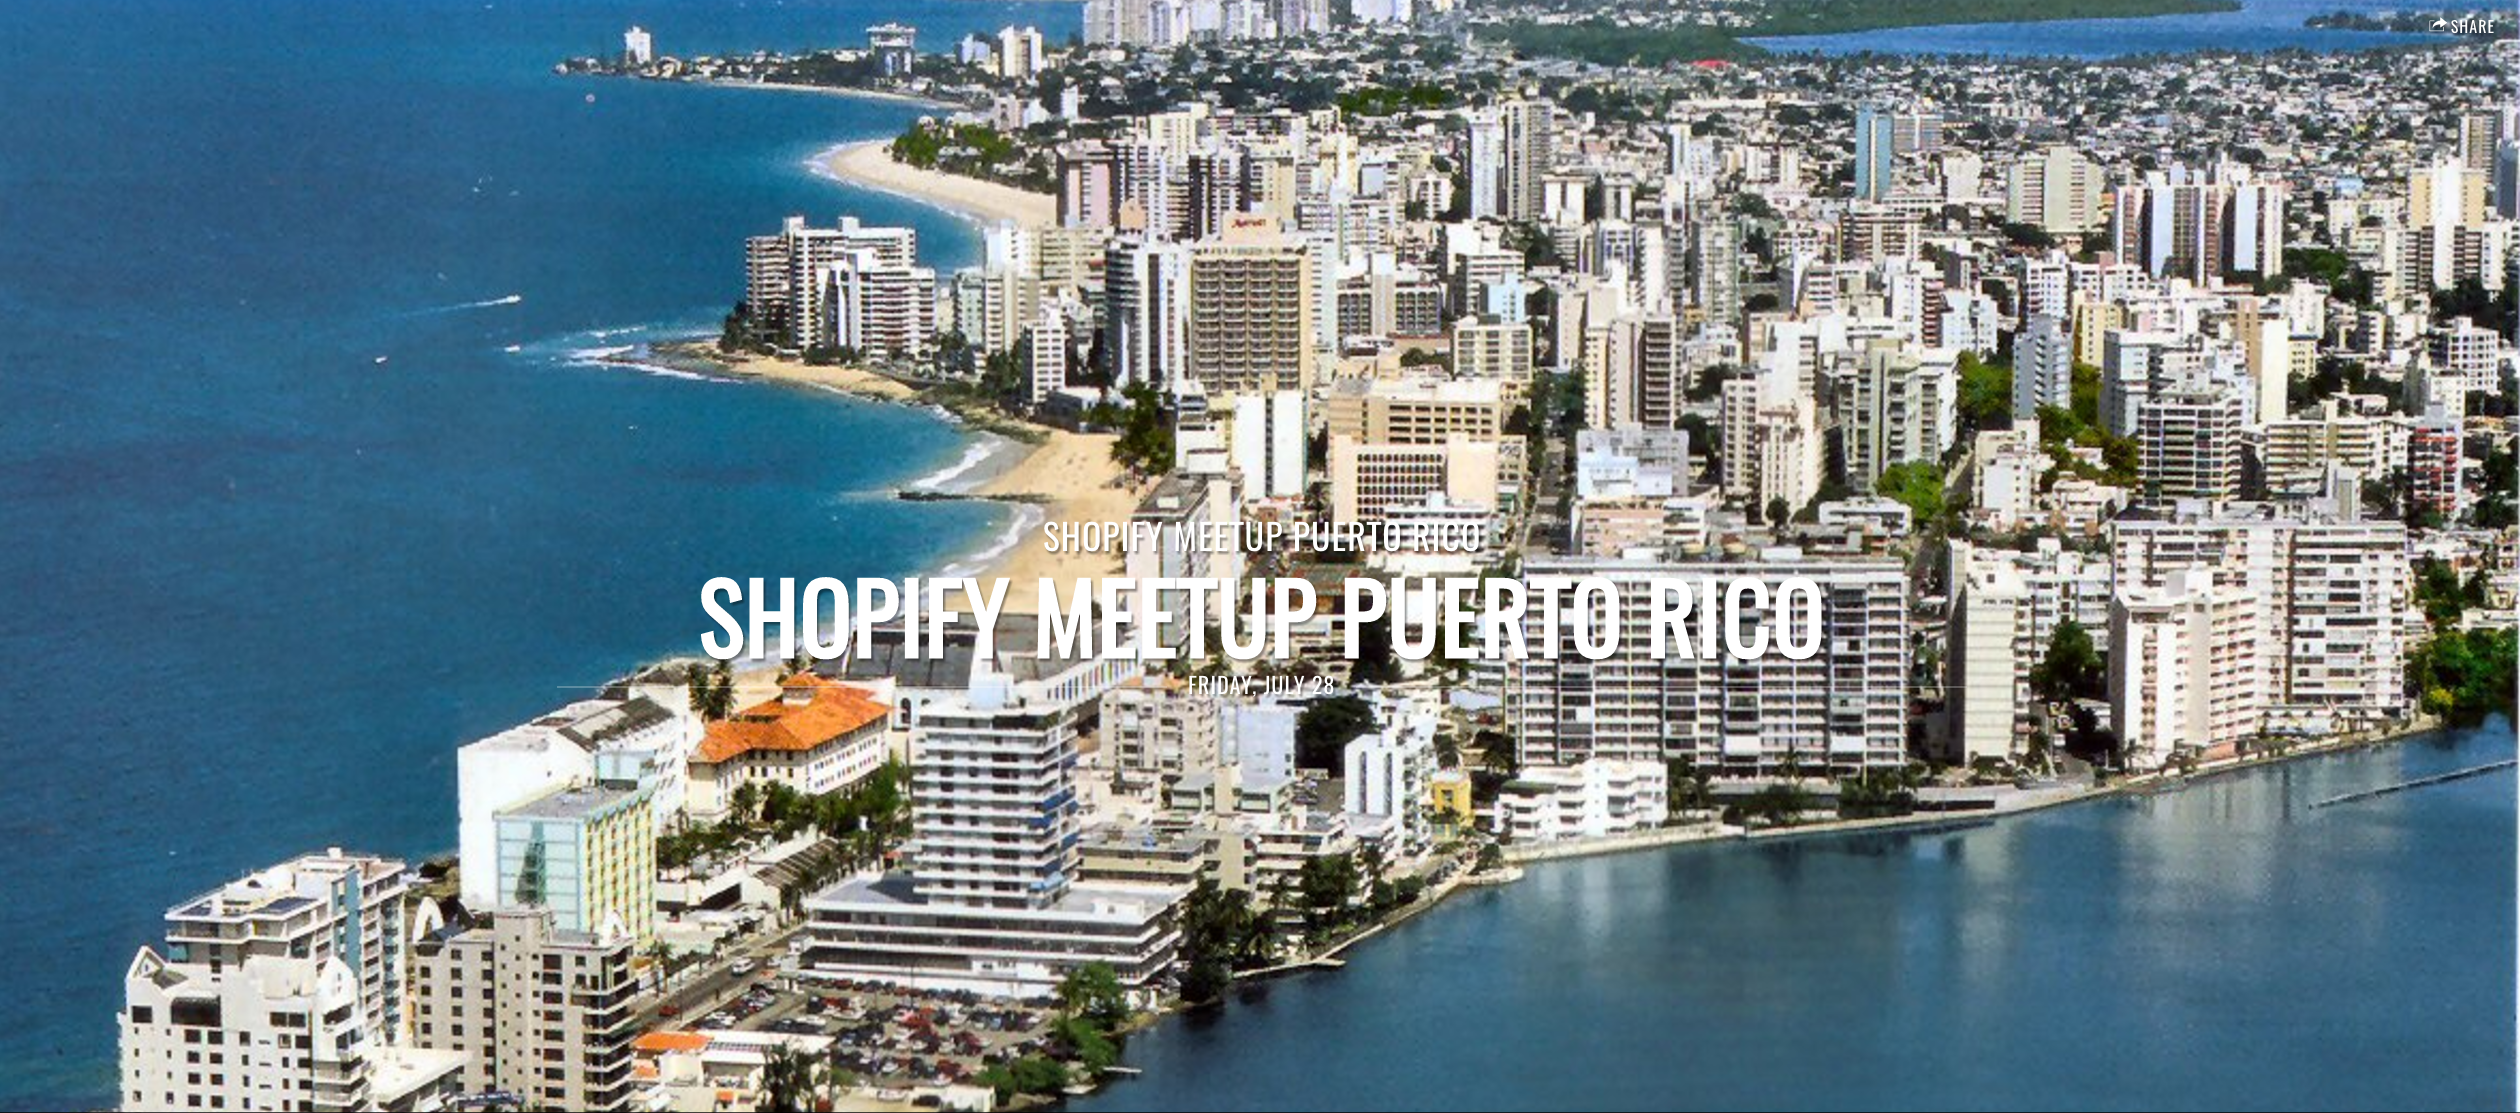 Meetup Puerto Rico